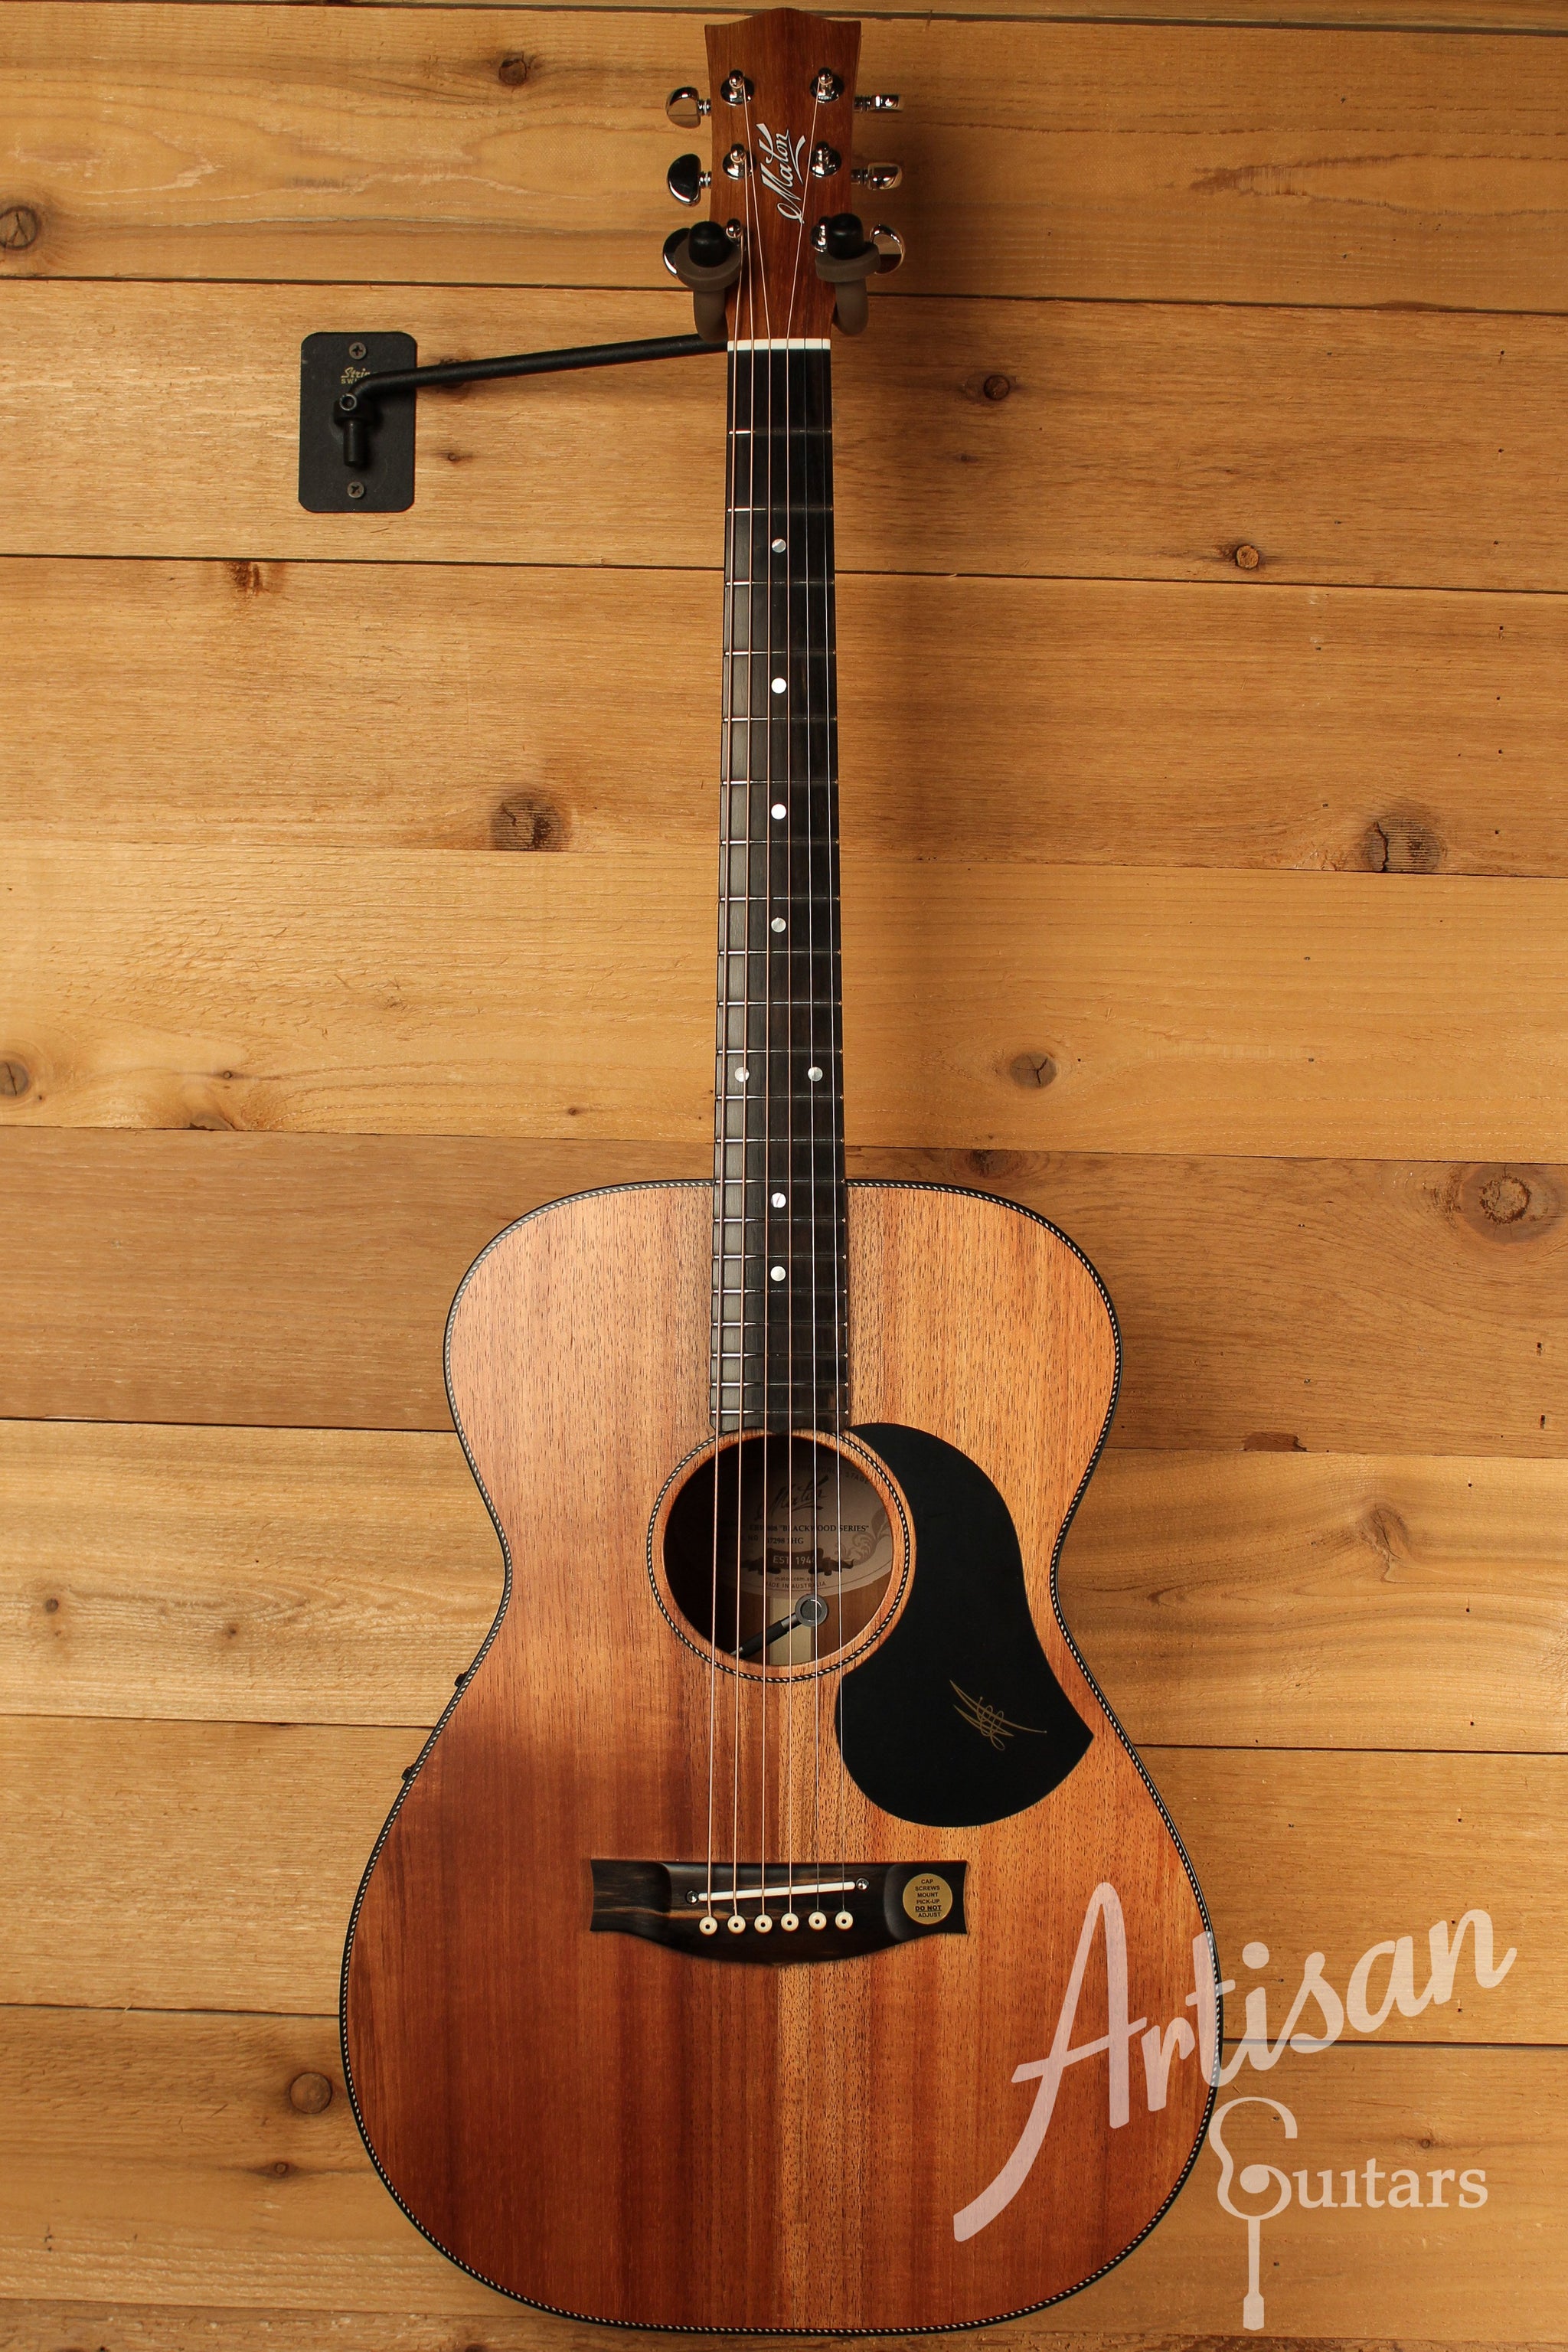 Maton EBW808 Guitar w/ Blackwood Top, Back & Sides w/ AP5 Pro Pickup System ID-12638 - Artisan Guitars